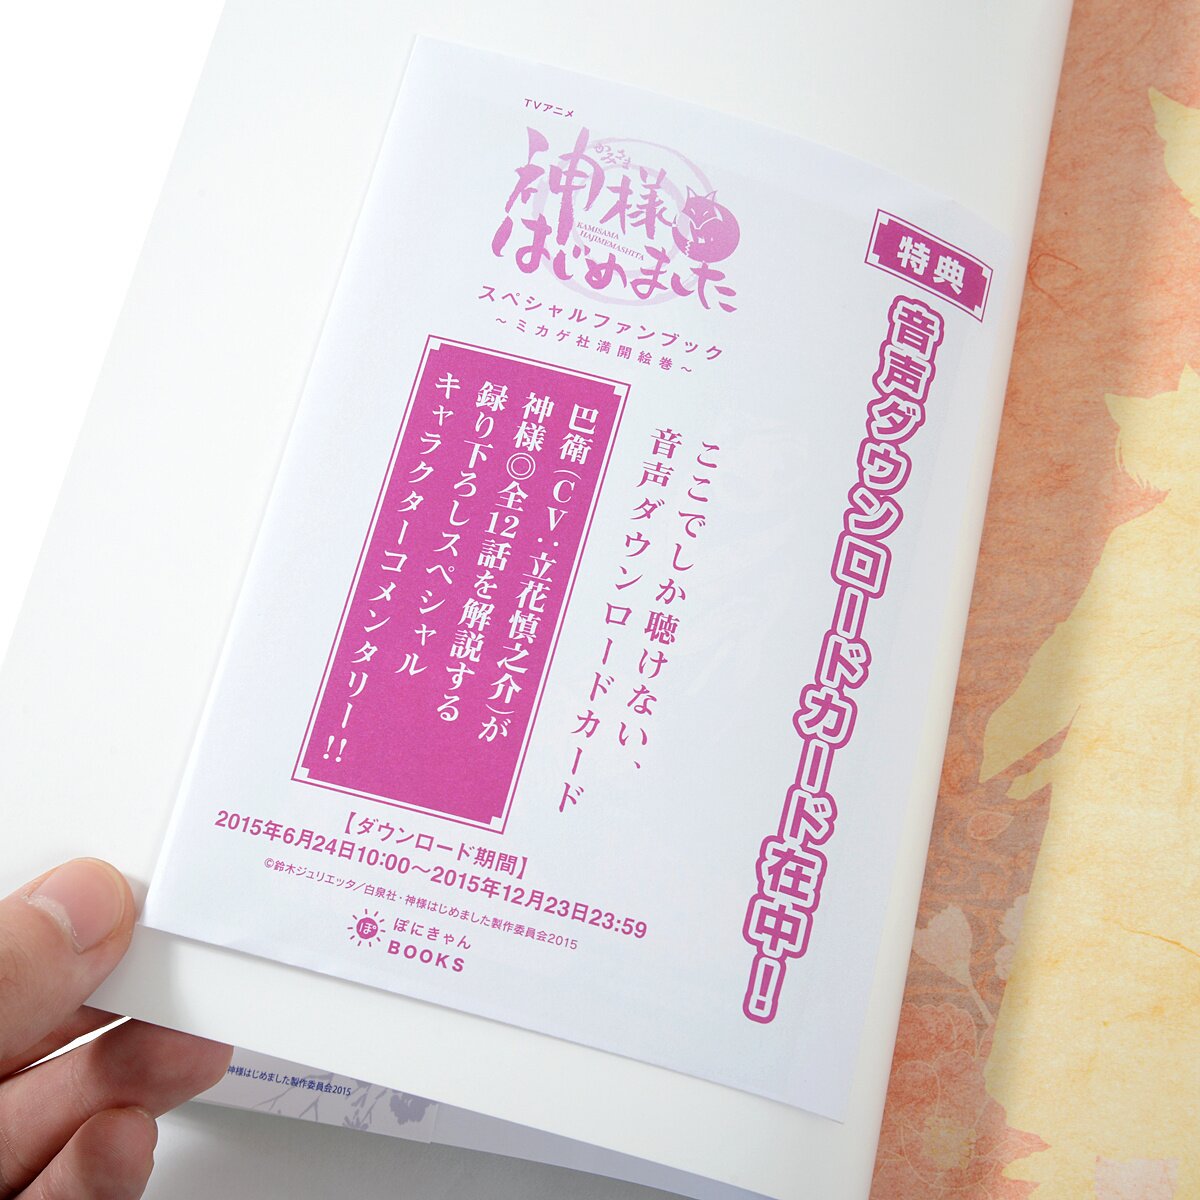 TV Anime Kamisama Hajimemashita Special Fanbook: Mikage Shrine Pictures  Edition - Tokyo Otaku Mode (TOM)